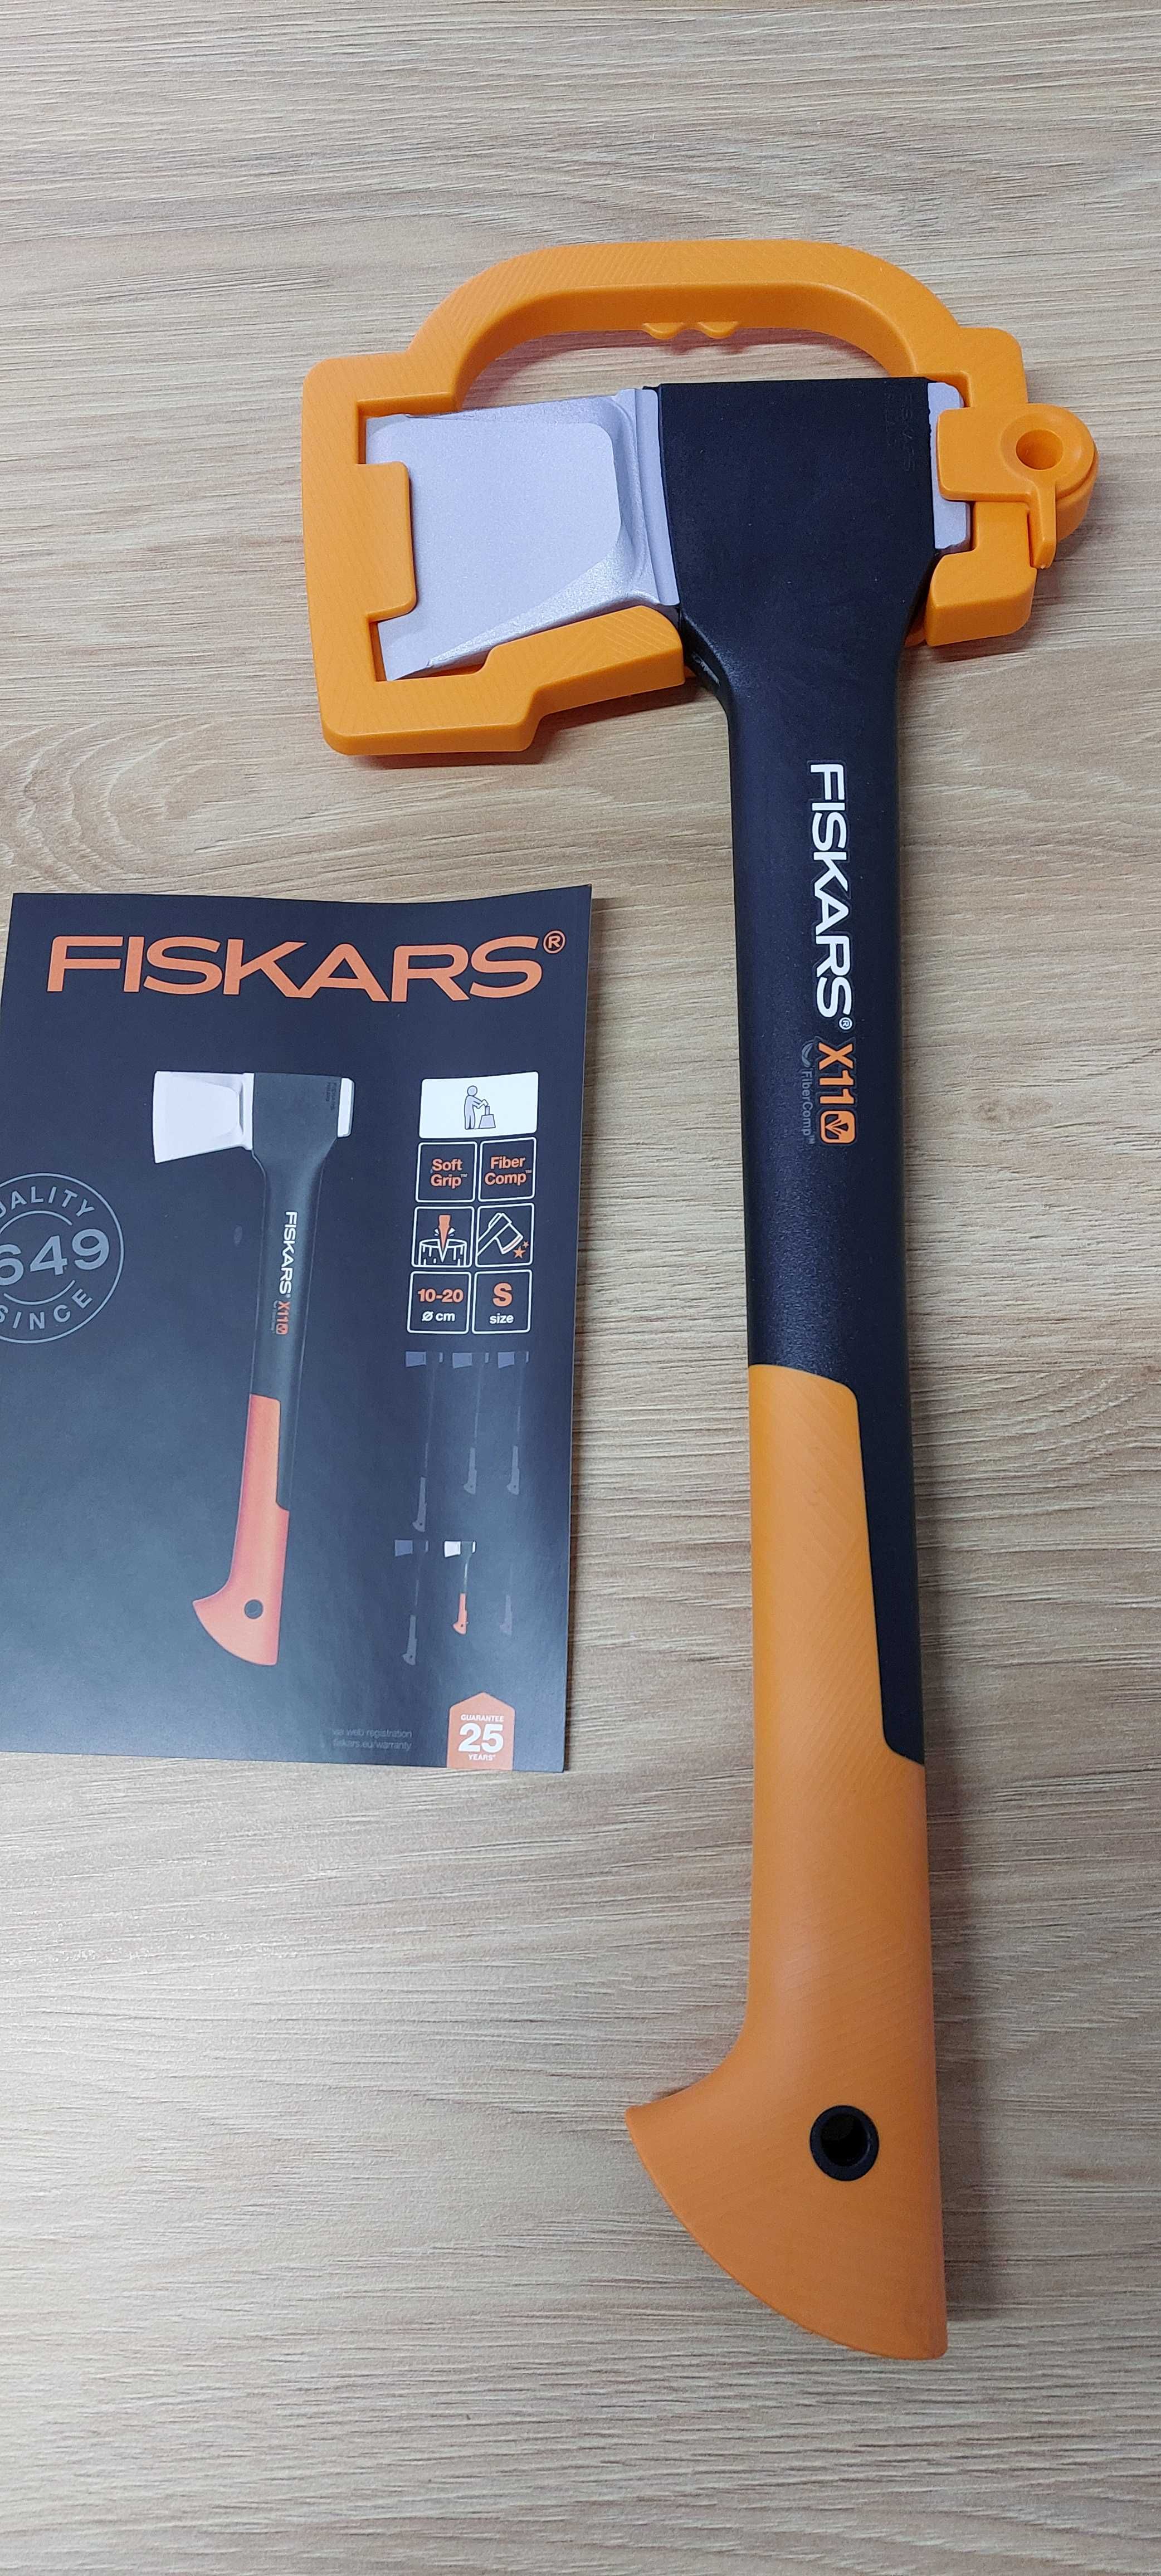 Topor pentru despicat Fiskars X11, S, 491 mm, 1090 g